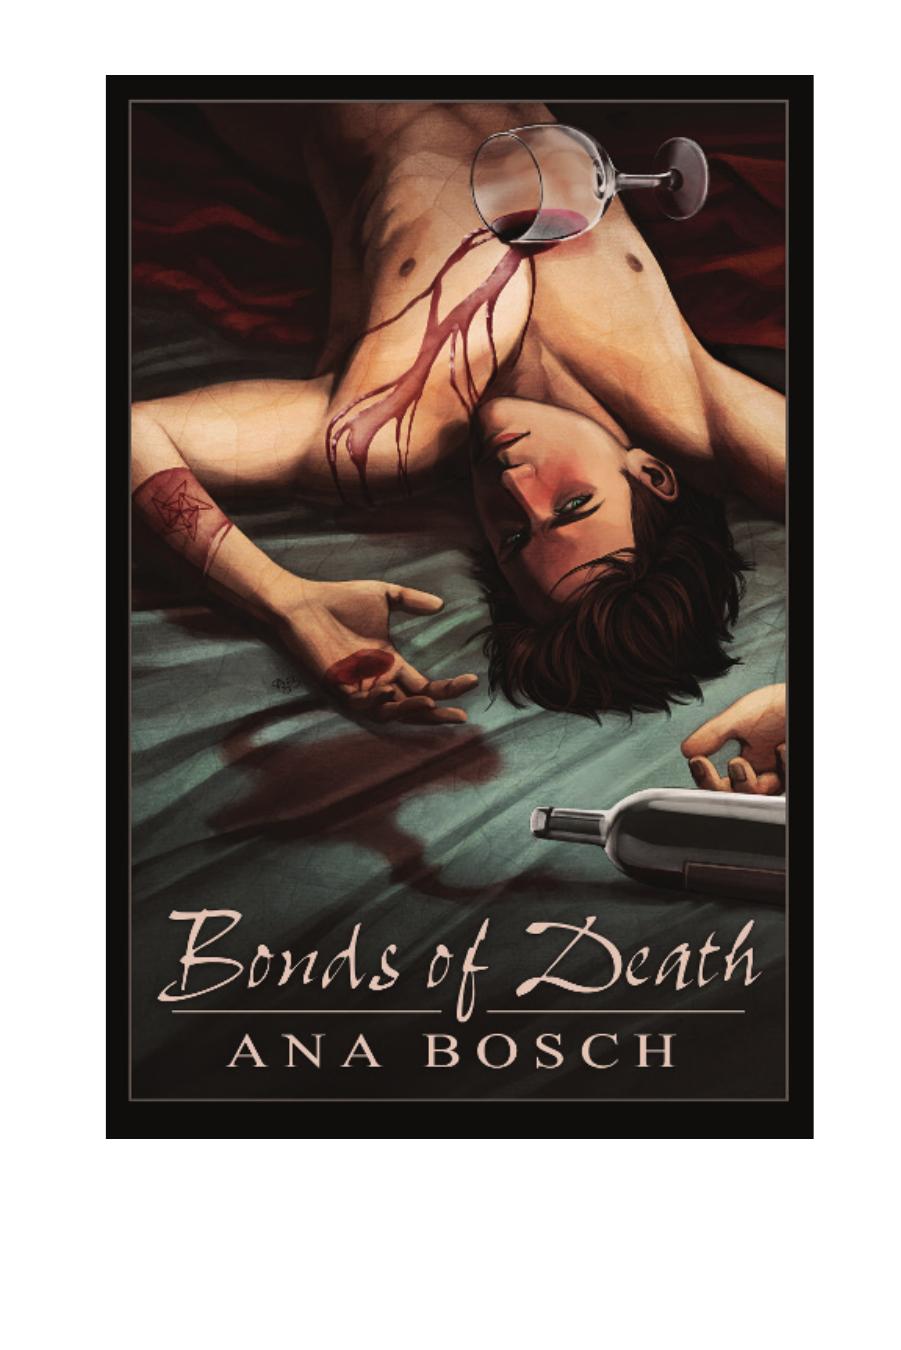 Bonds of Death by Ana Bosch